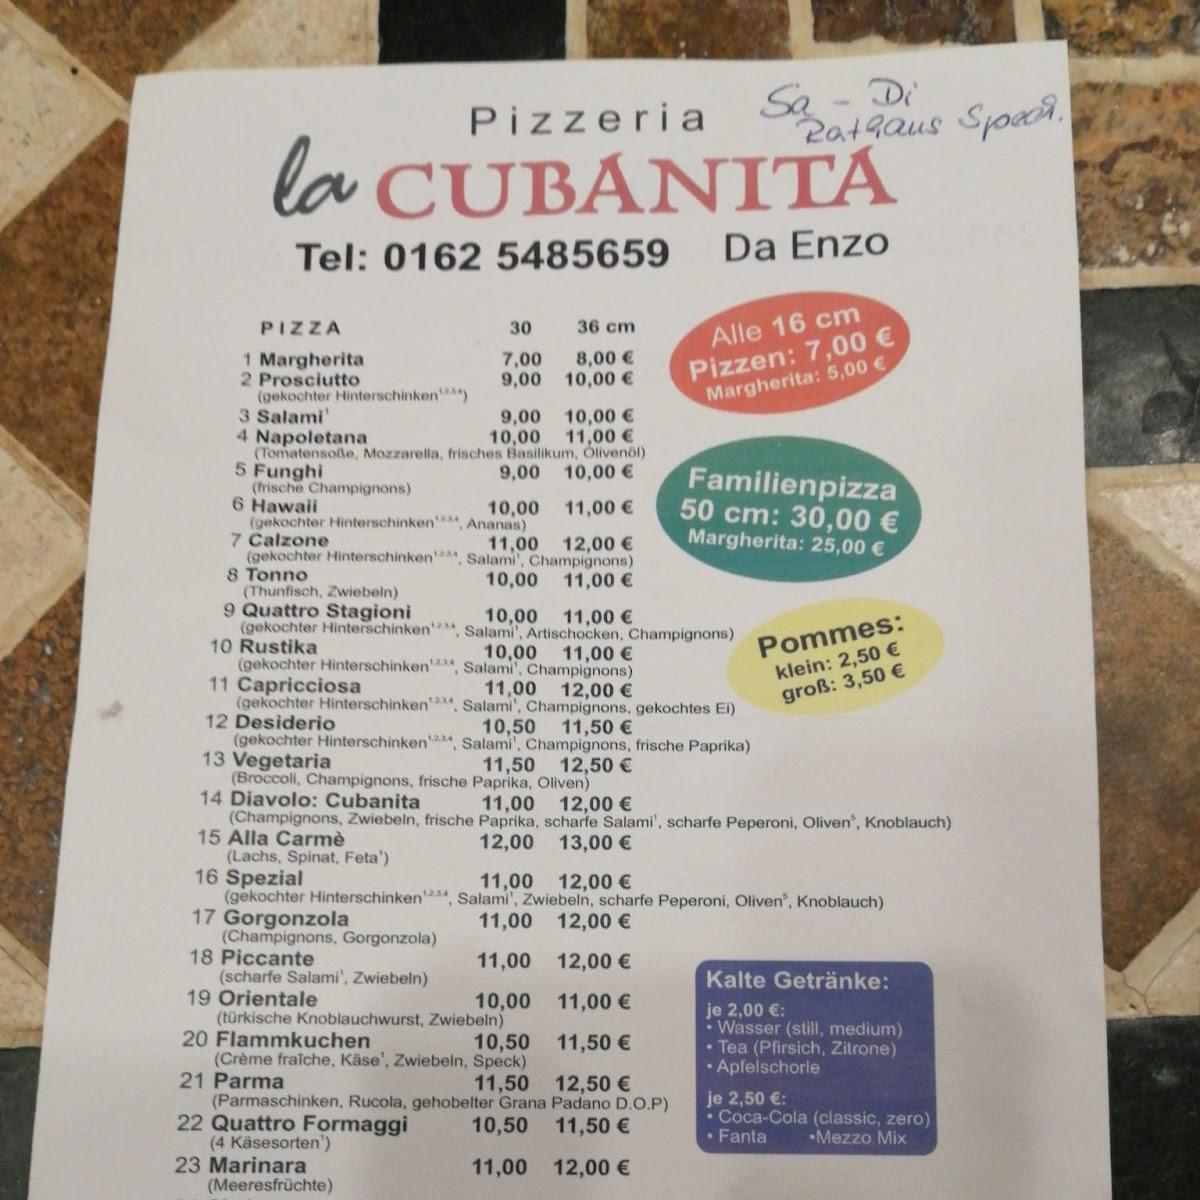 Restaurant "La Cubanita" in Spechbach